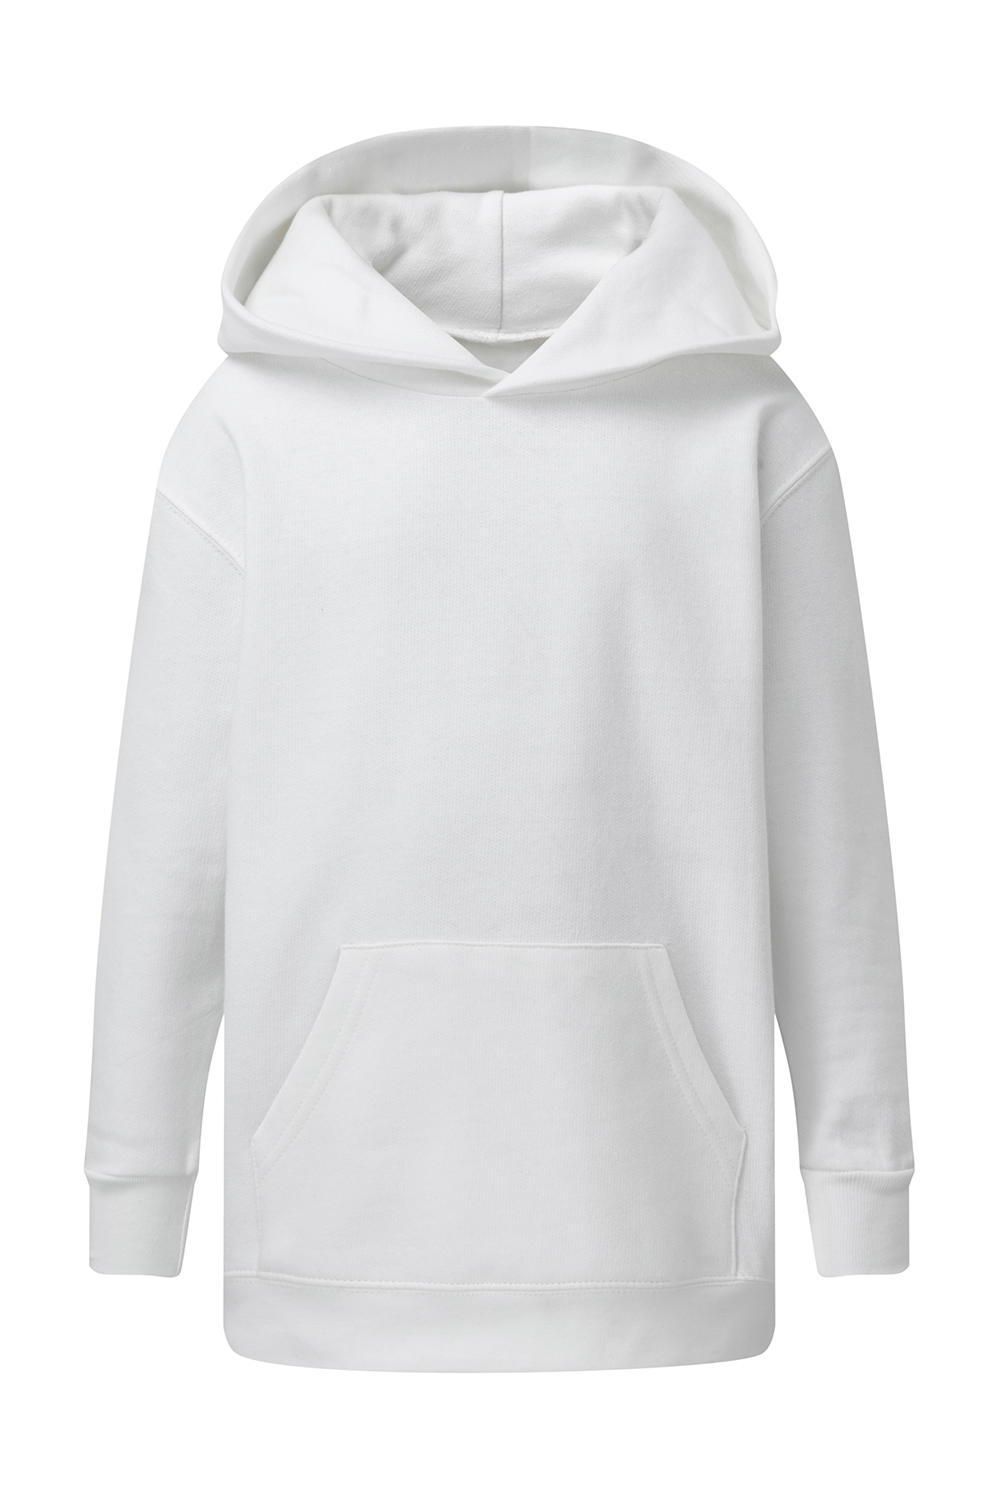  Kids Hooded Sweatshirt in Farbe White